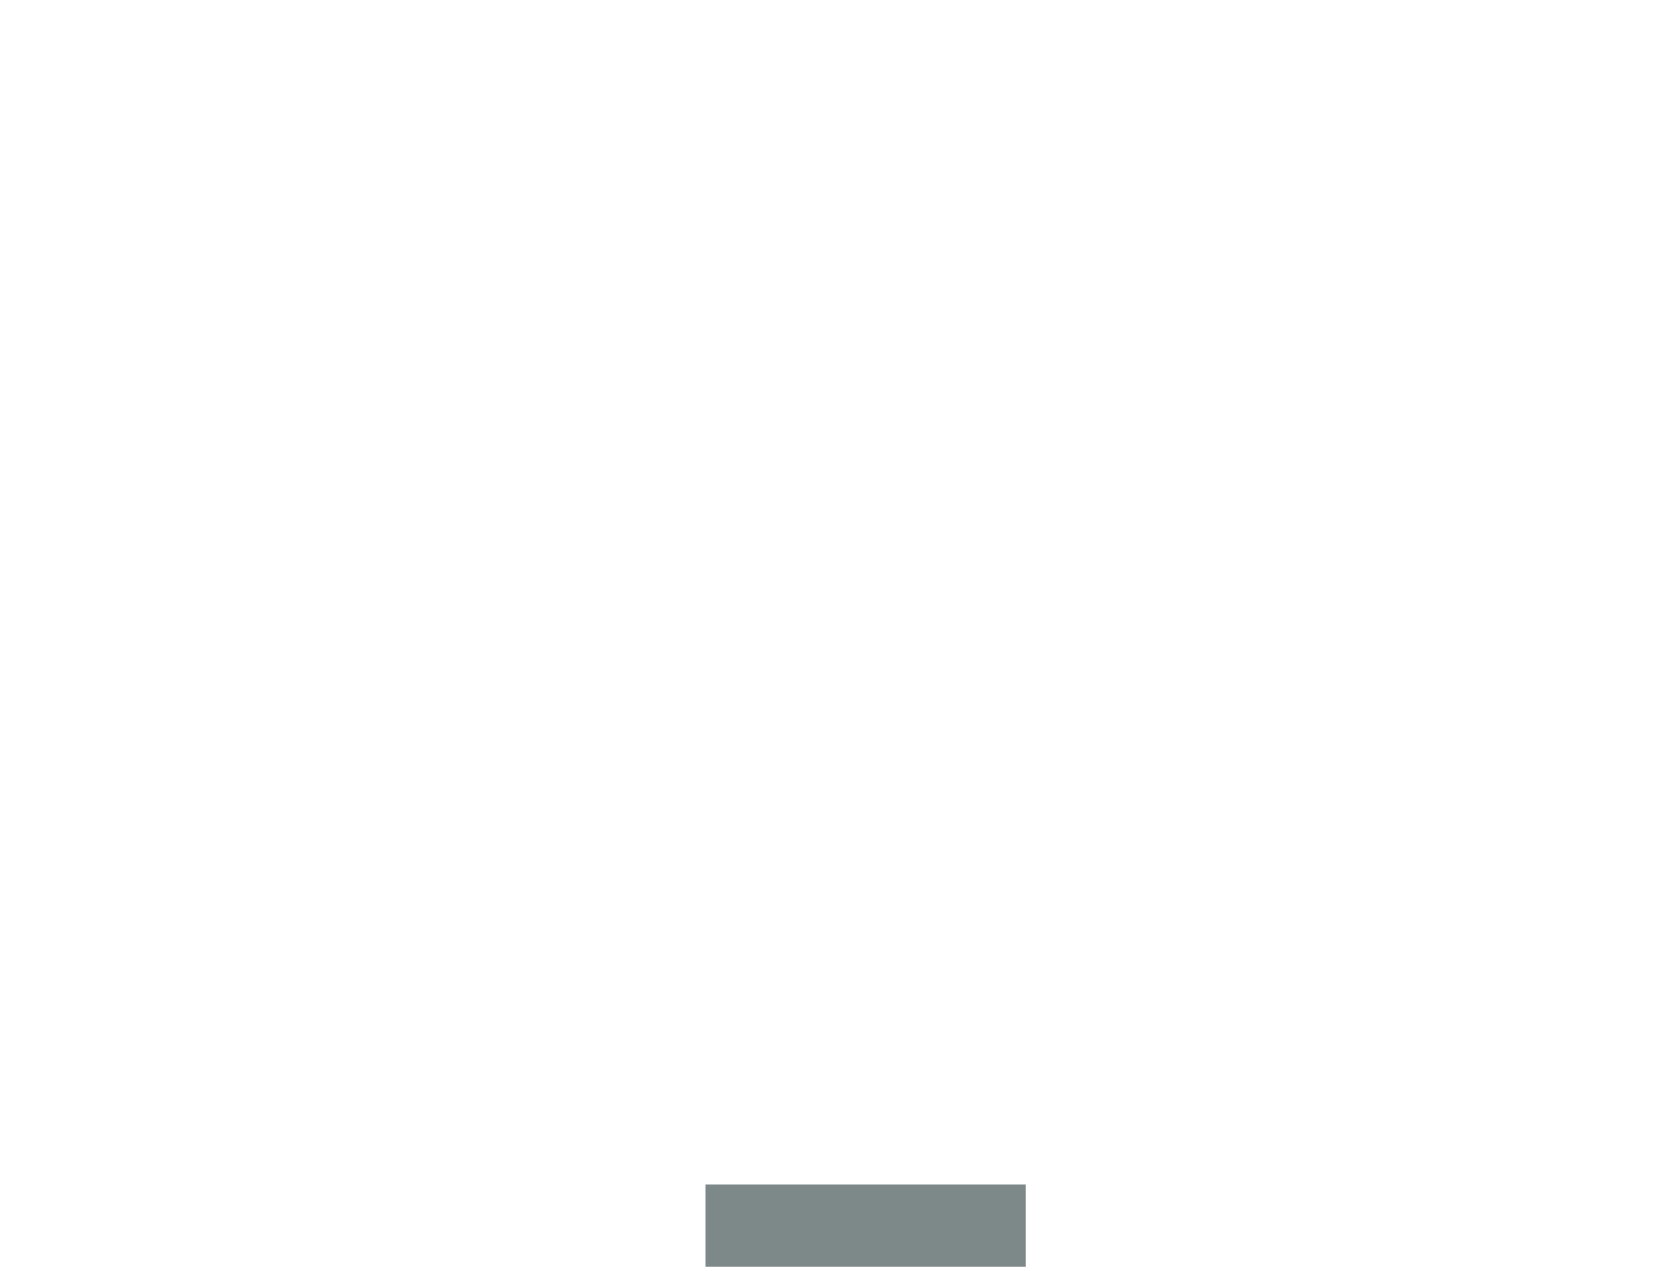 The bruce_Logos_Mesa de trabajo 1 copia 3